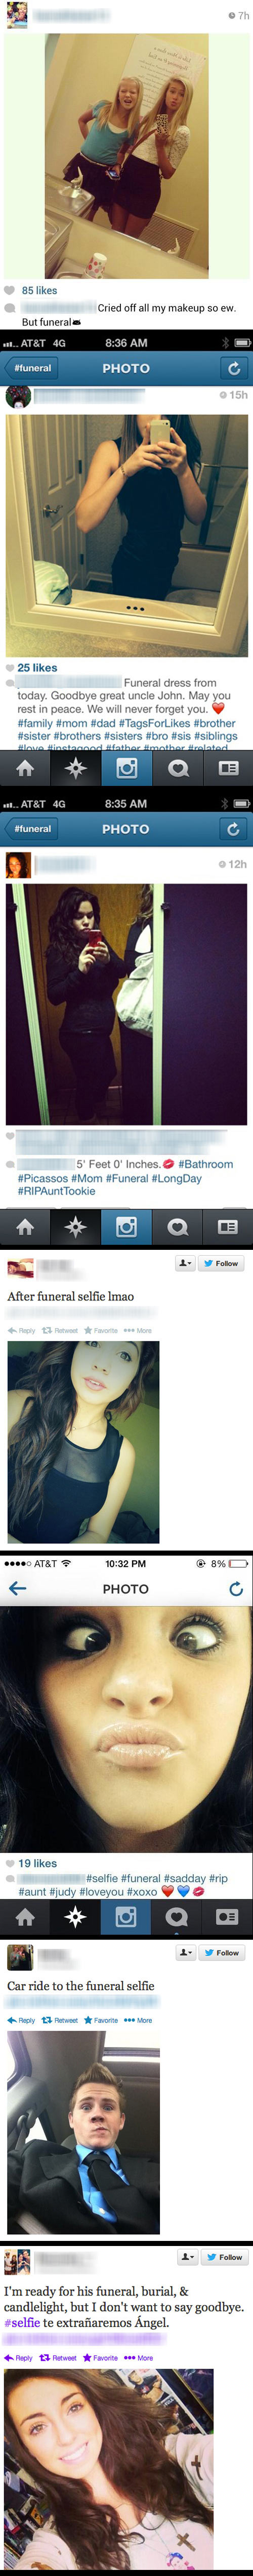 Funeral selfies! #RIPGrandma